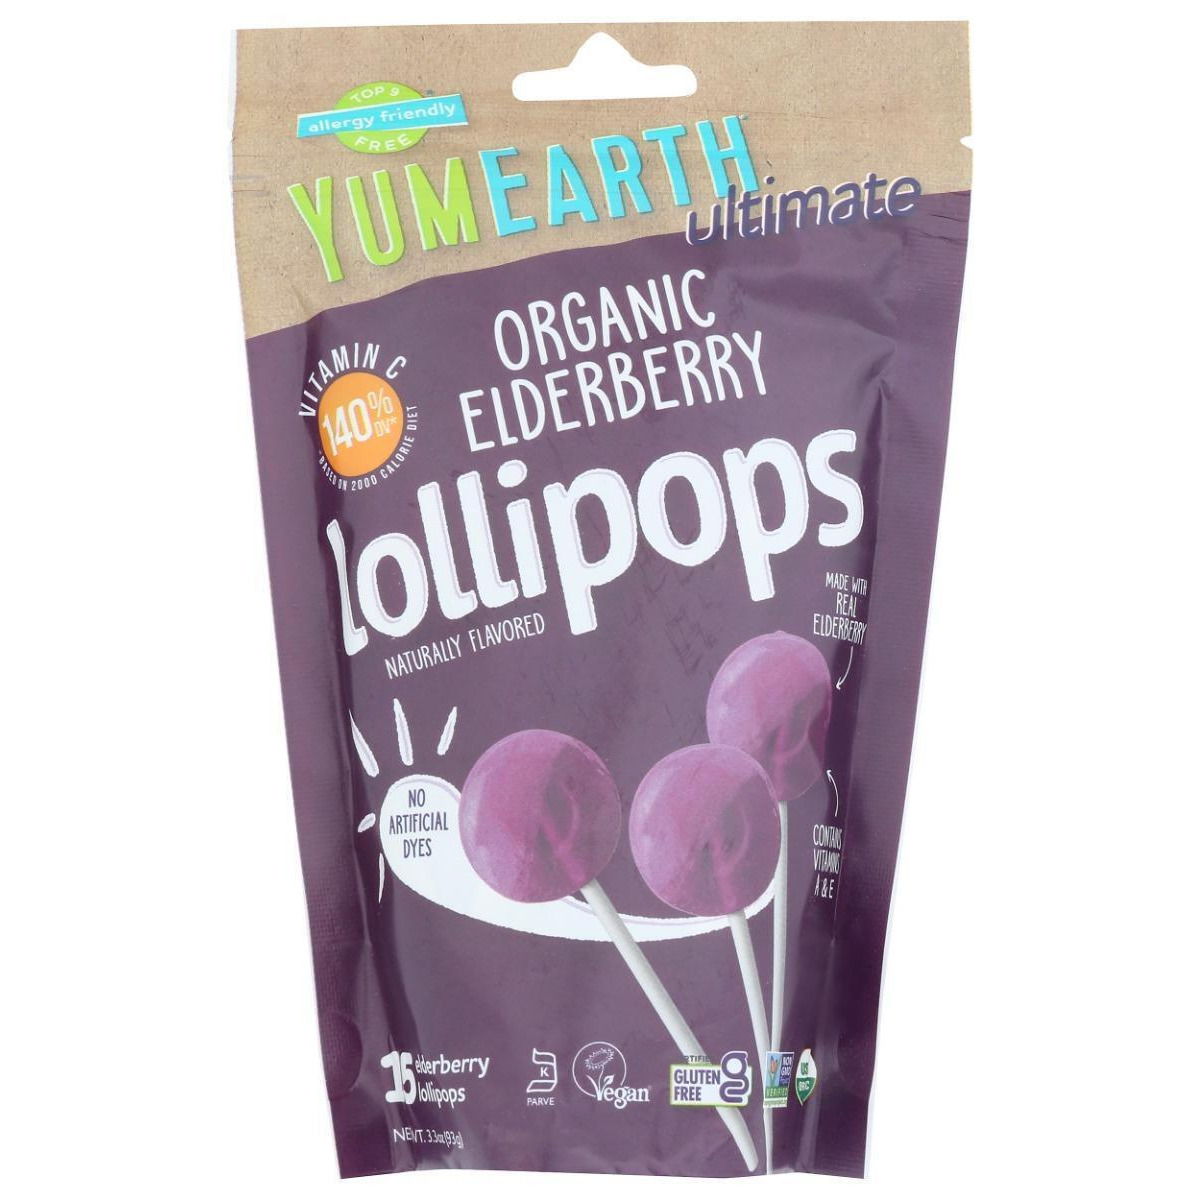 Yumearth KHRM02301735 3.3 oz Organic Elderberry Lollipops